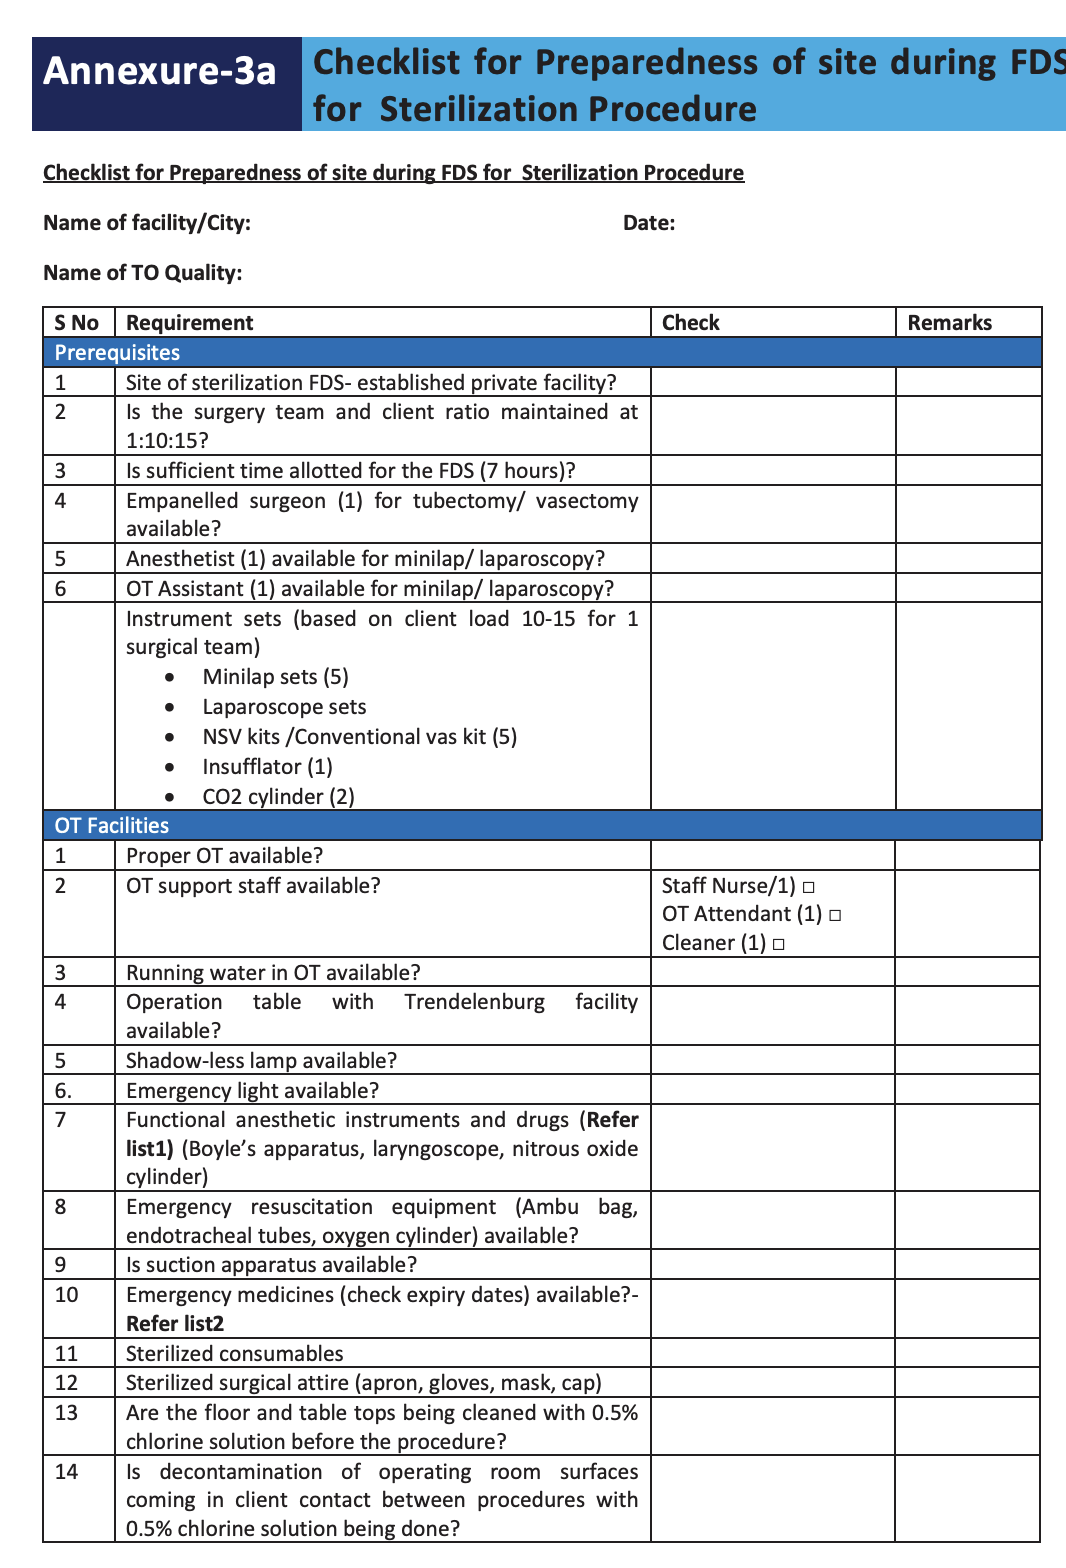 Checklist for Preparedness of Site during FDS for Sterilization Procedure